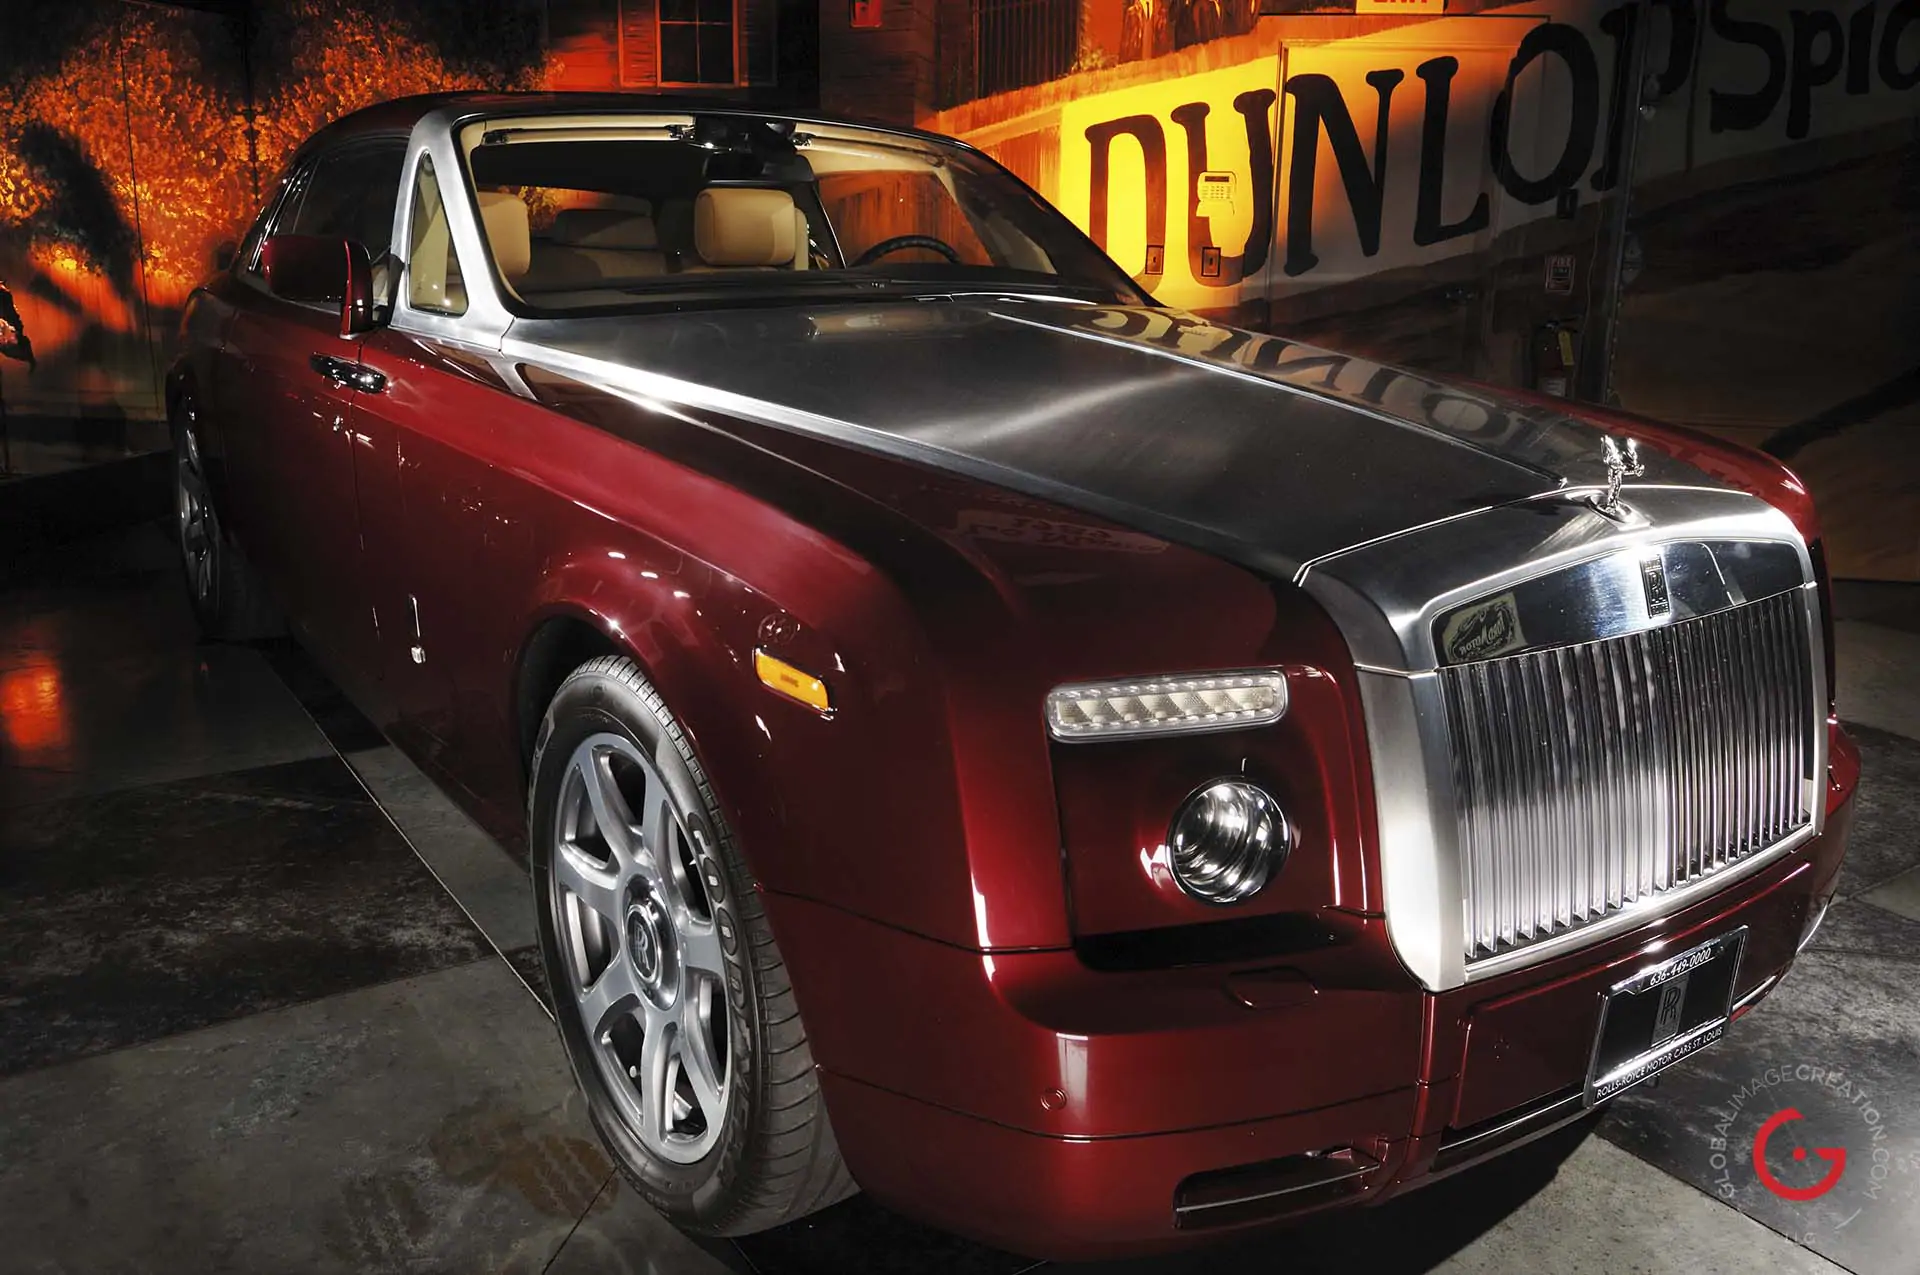 Rolls Royce Phantom Front 3/4 View - Professional Car Photographer, Automotive Photography